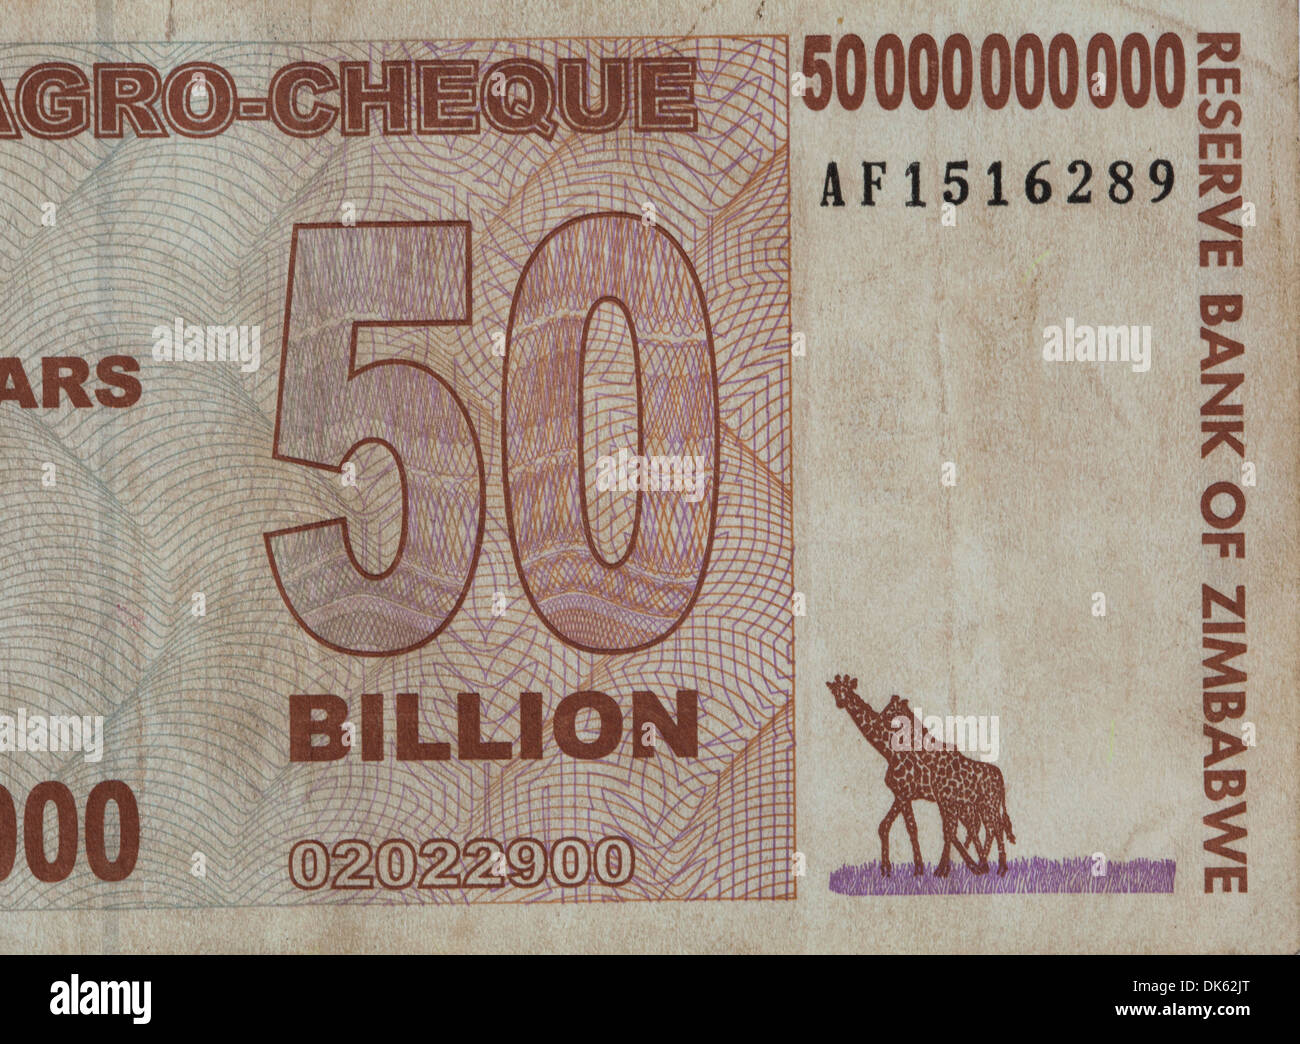 Paper Money World Currency ZIMBABWE 25 Billion Dollars 2008 P-62